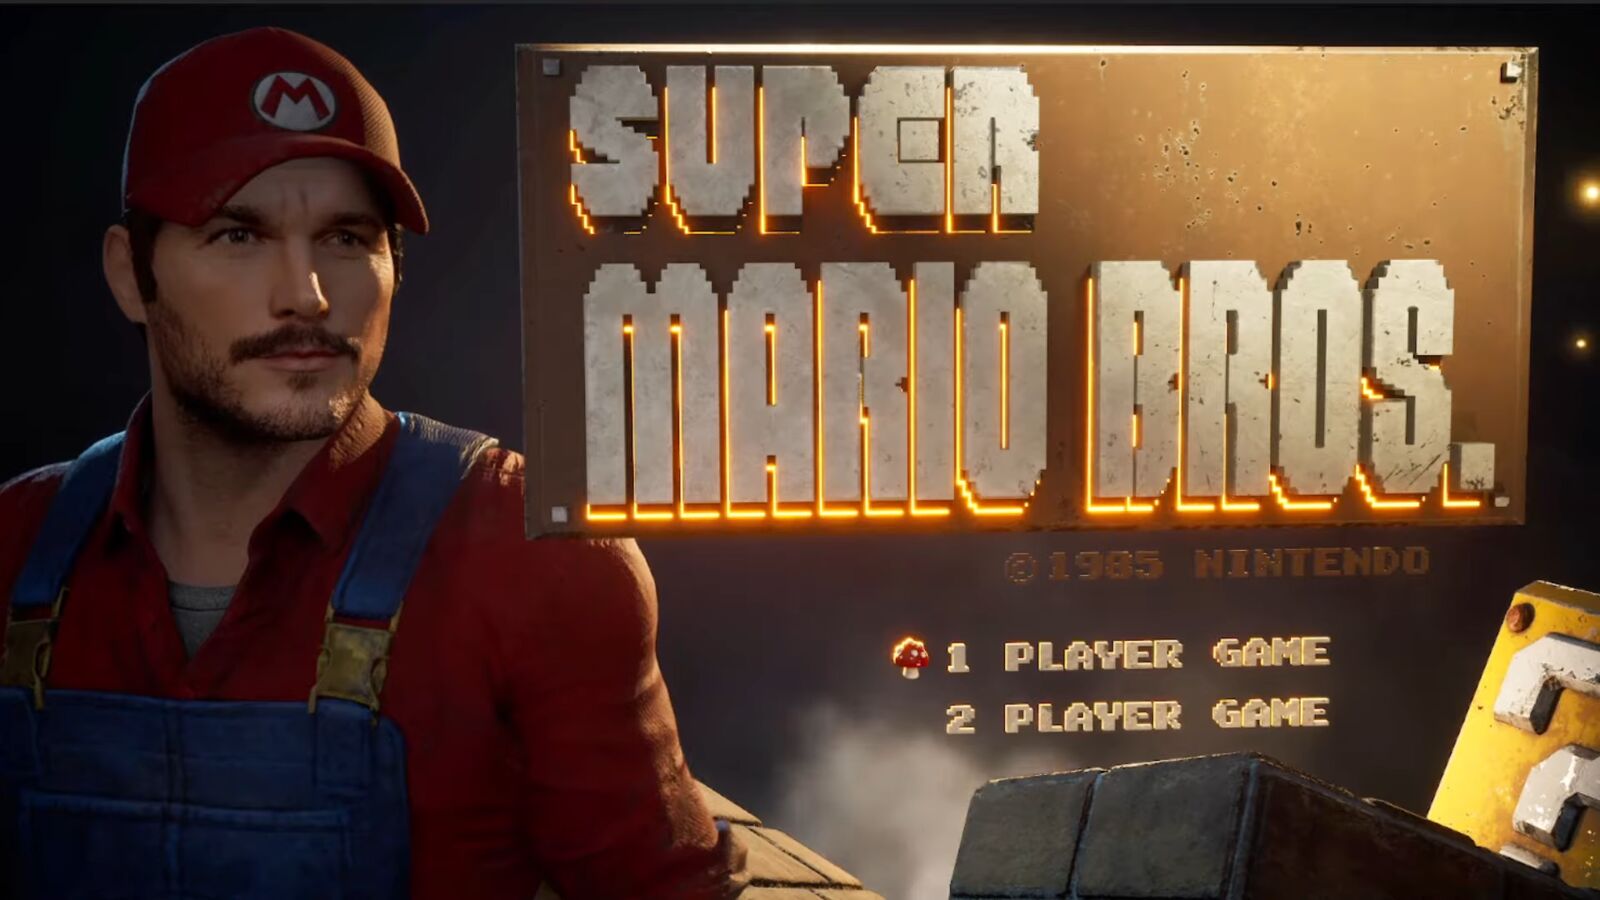 Her er en fantrailer til en Super Mario "genindspilning" med Chris Pratt